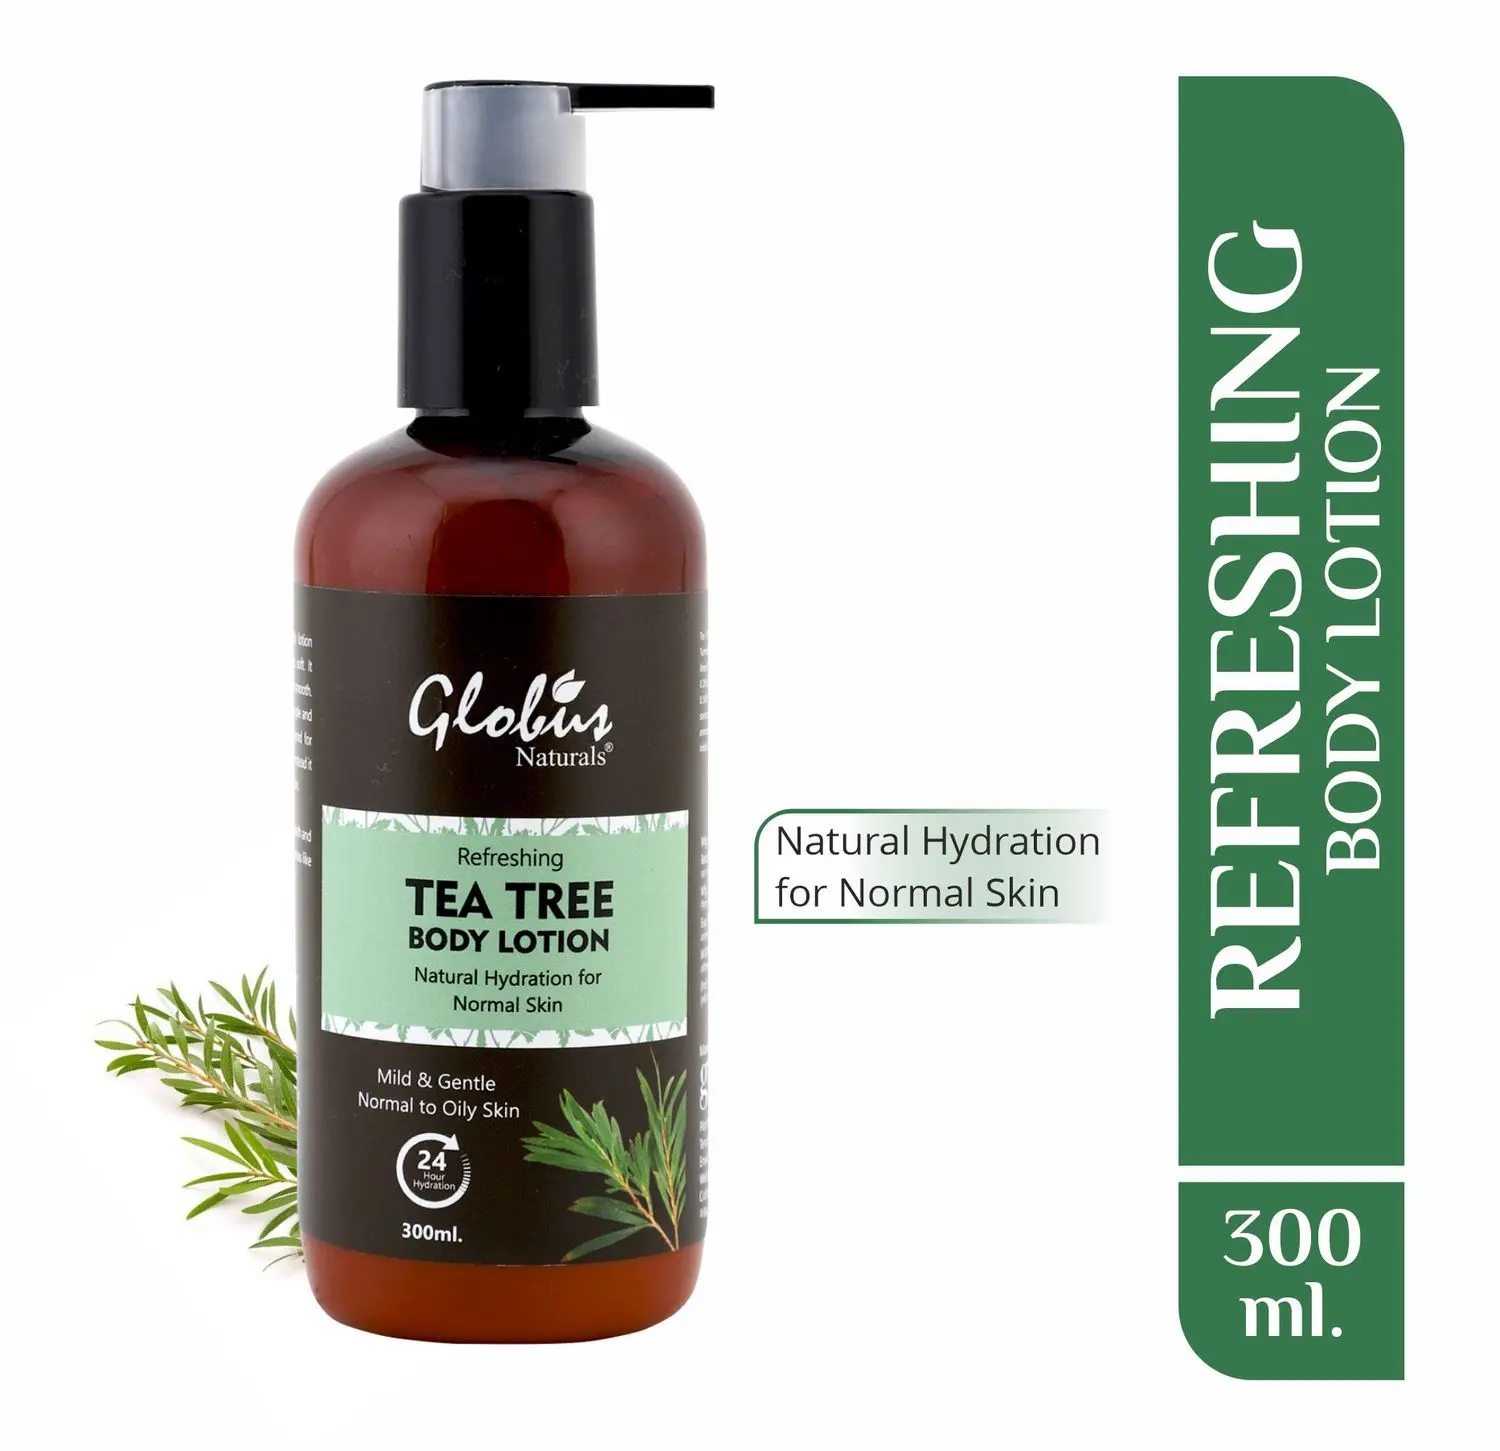 Globus Naturals Refreshing Tea Tree Body Lotion (300 ml)